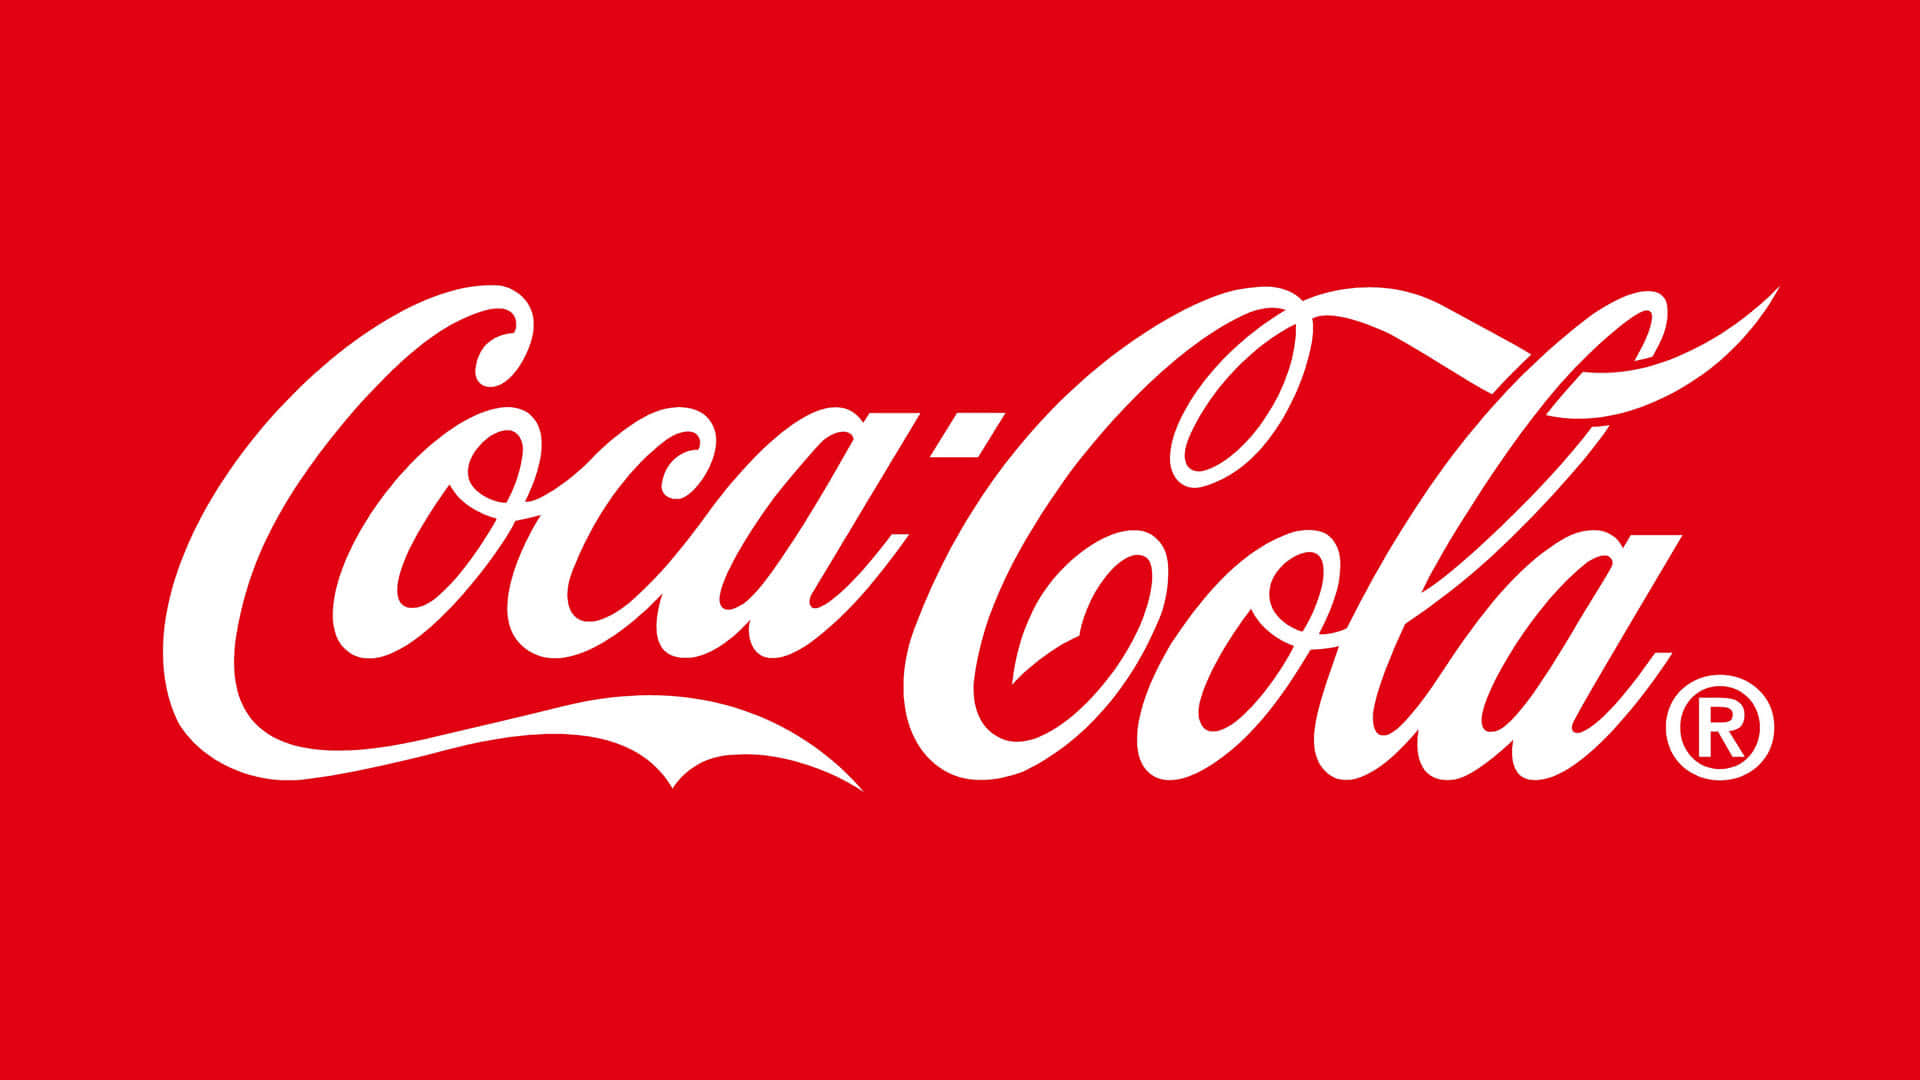 Cocacola-logotypen På En Röd Bakgrund. Wallpaper